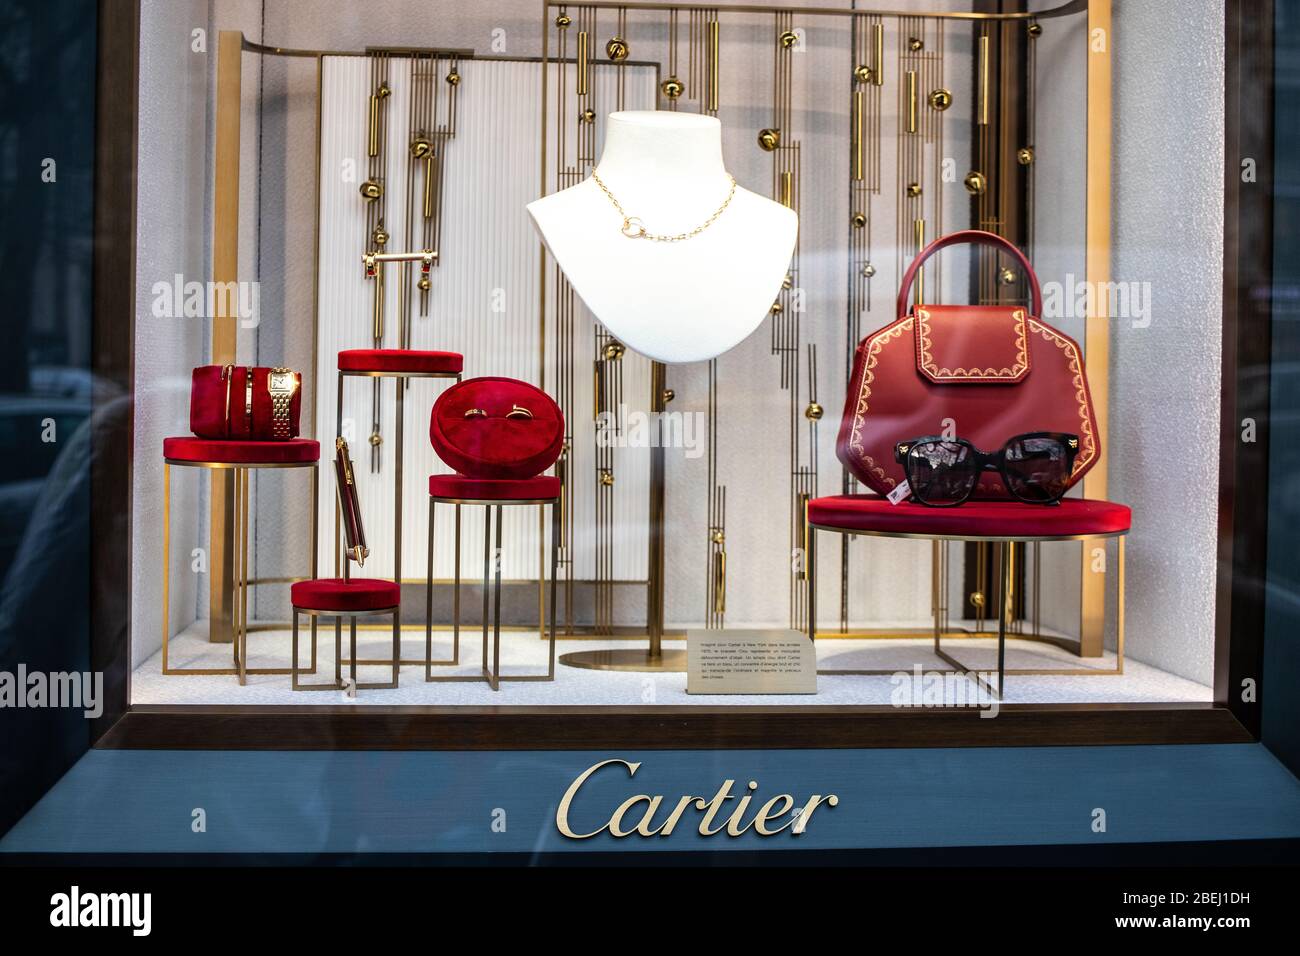 Cartier Store Front High Resolution 